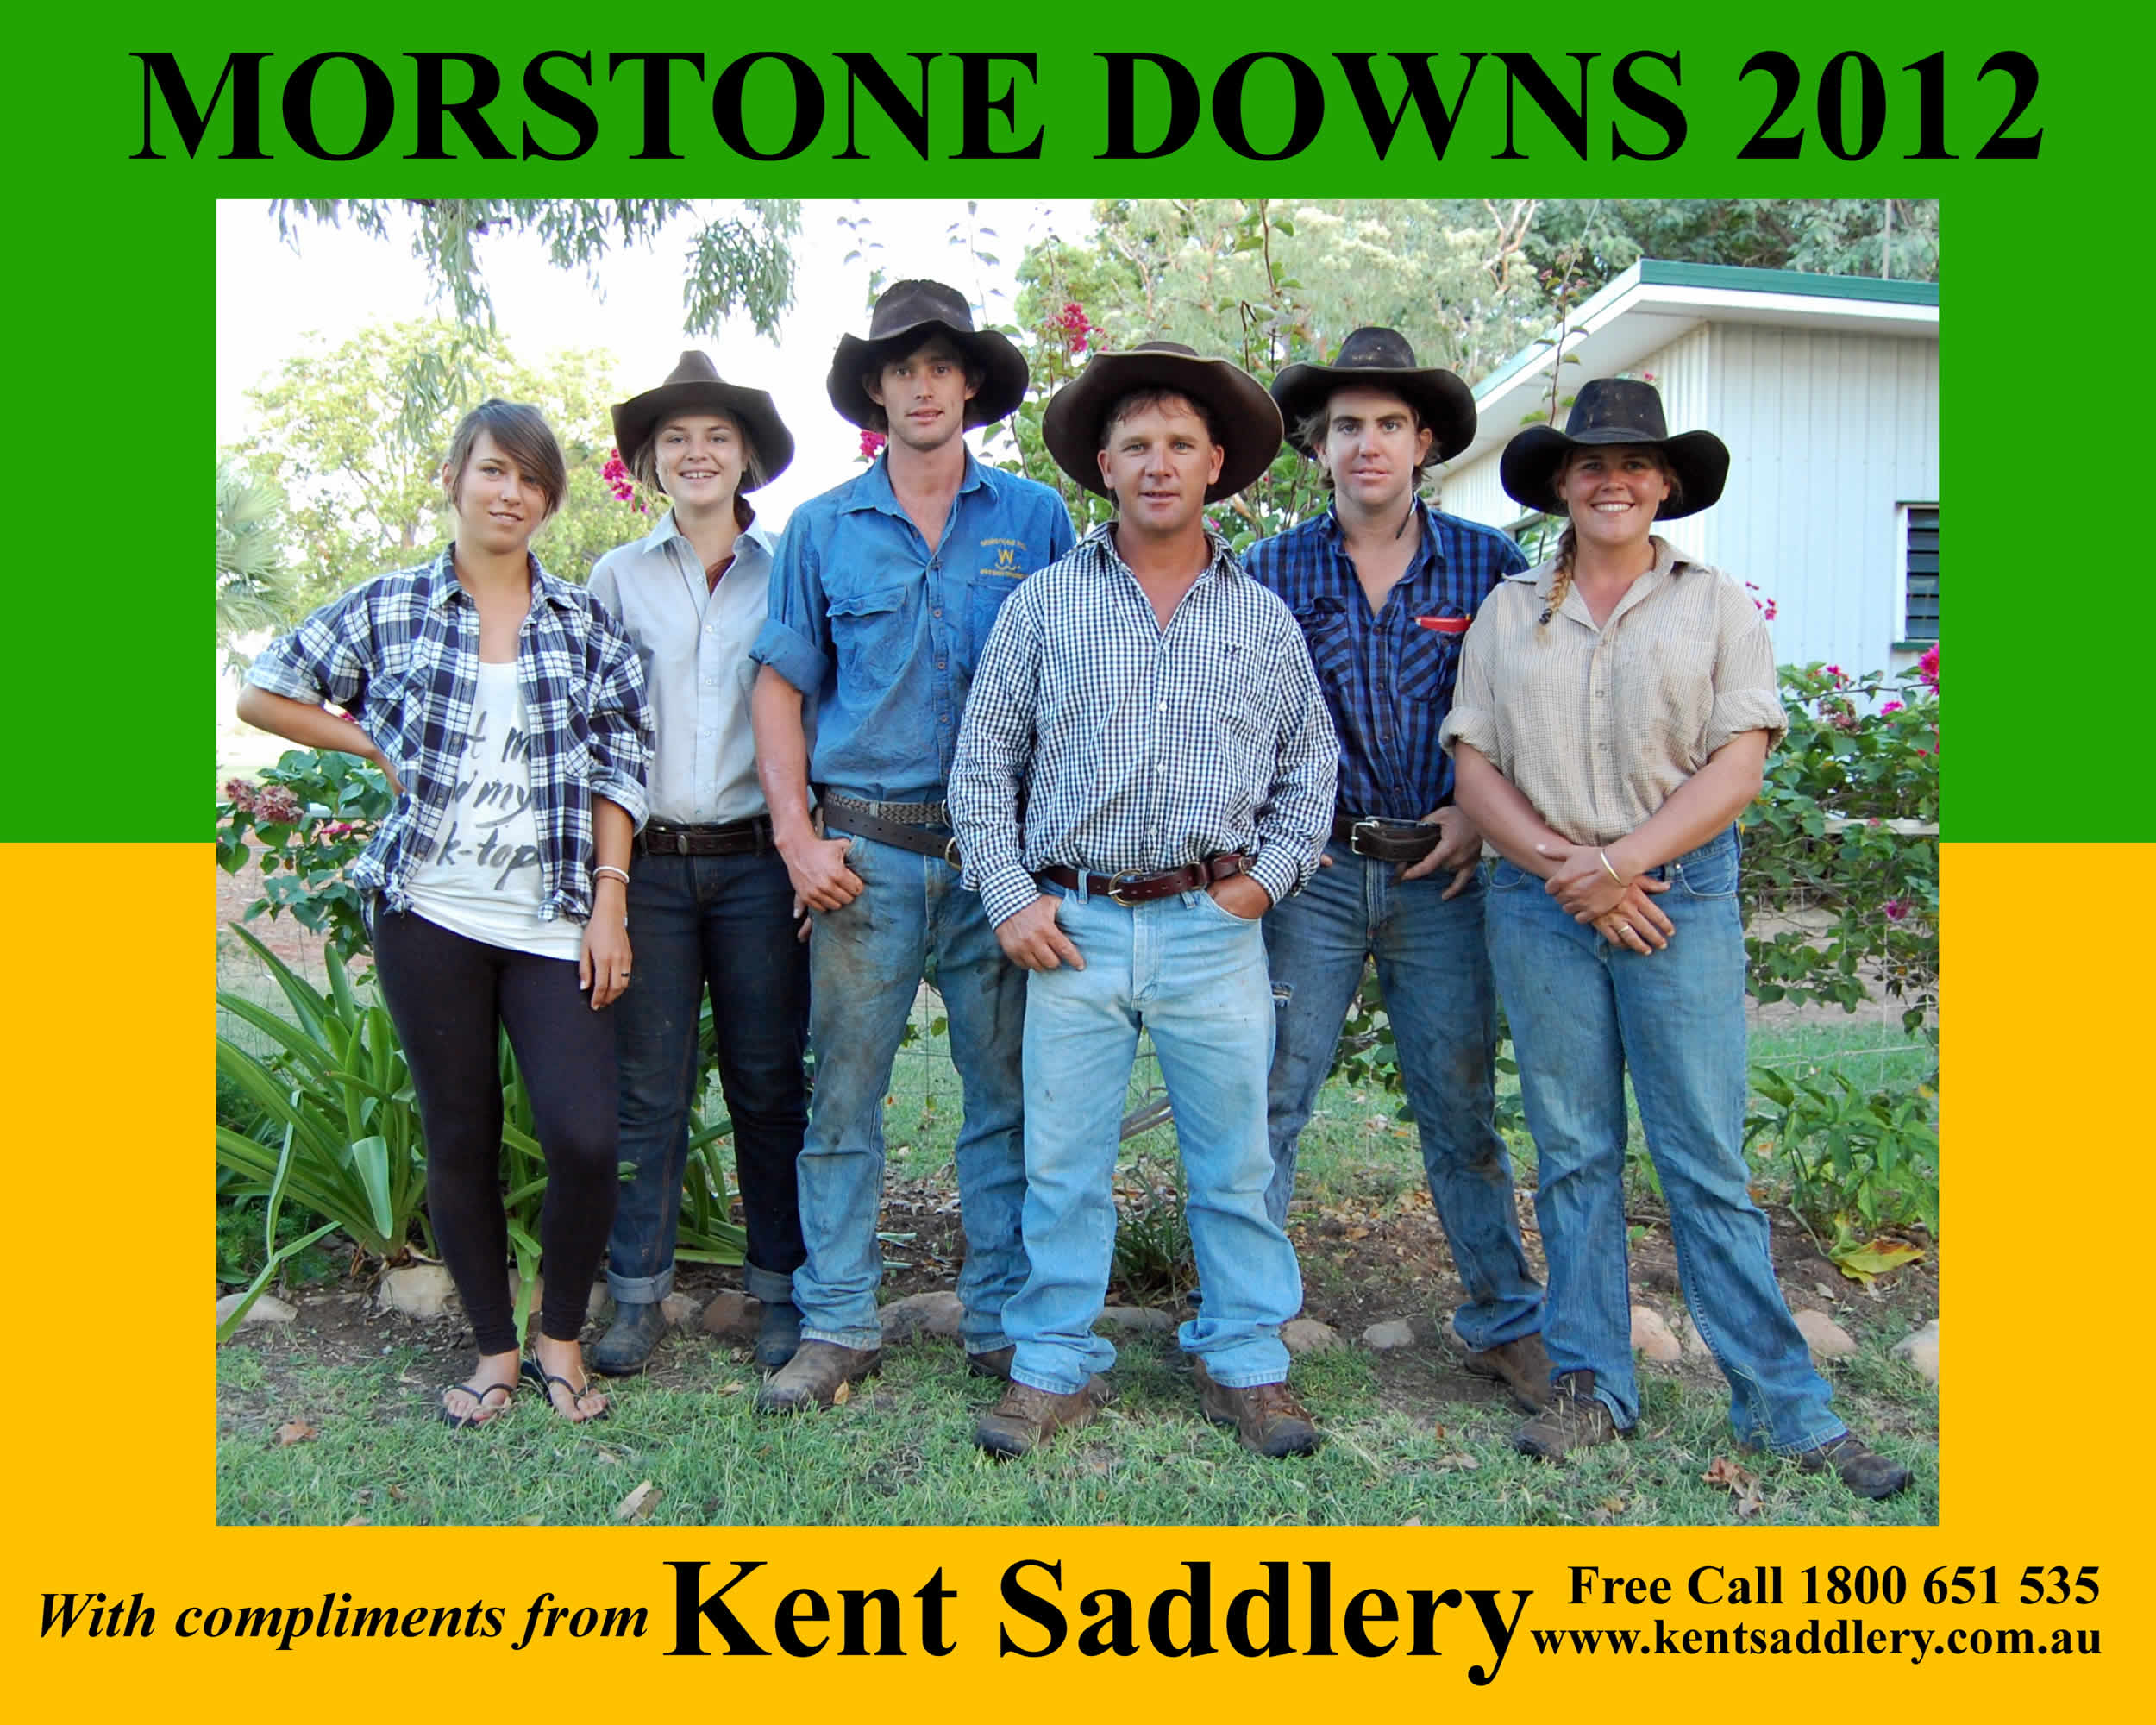 Queensland - Morstone Downs 17